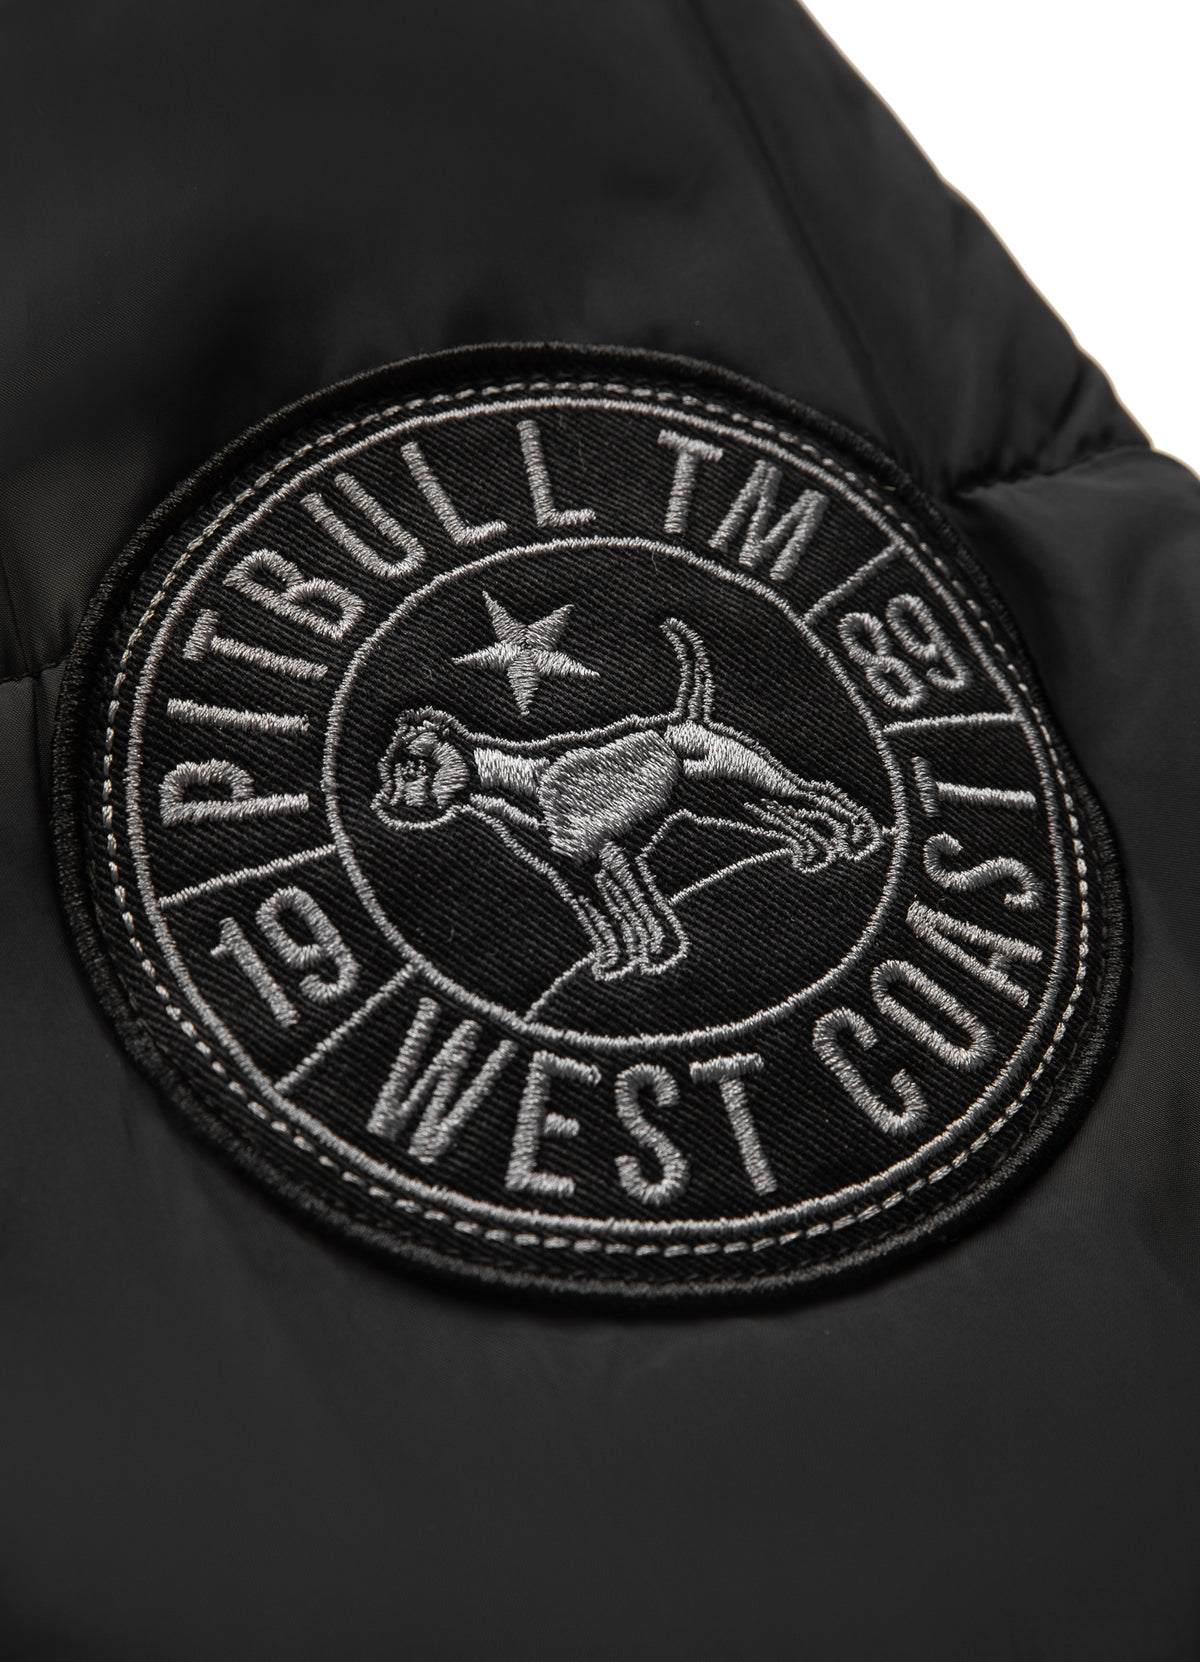 Men's Jacket Mobley Black - Pitbull West Coast International Store 